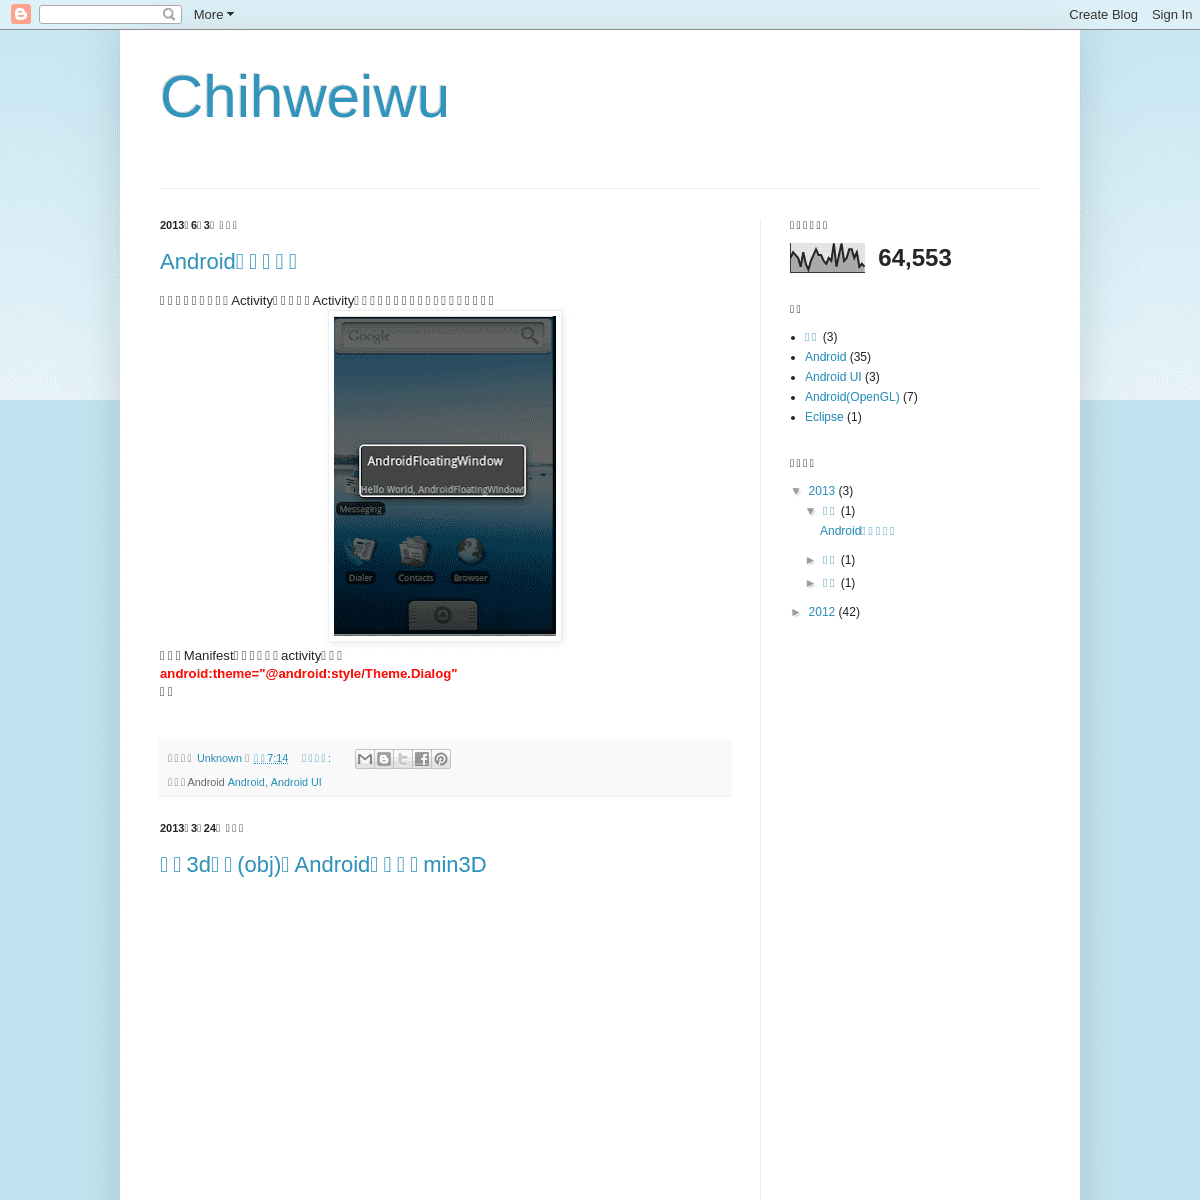 A complete backup of chihweiwu.blogspot.com